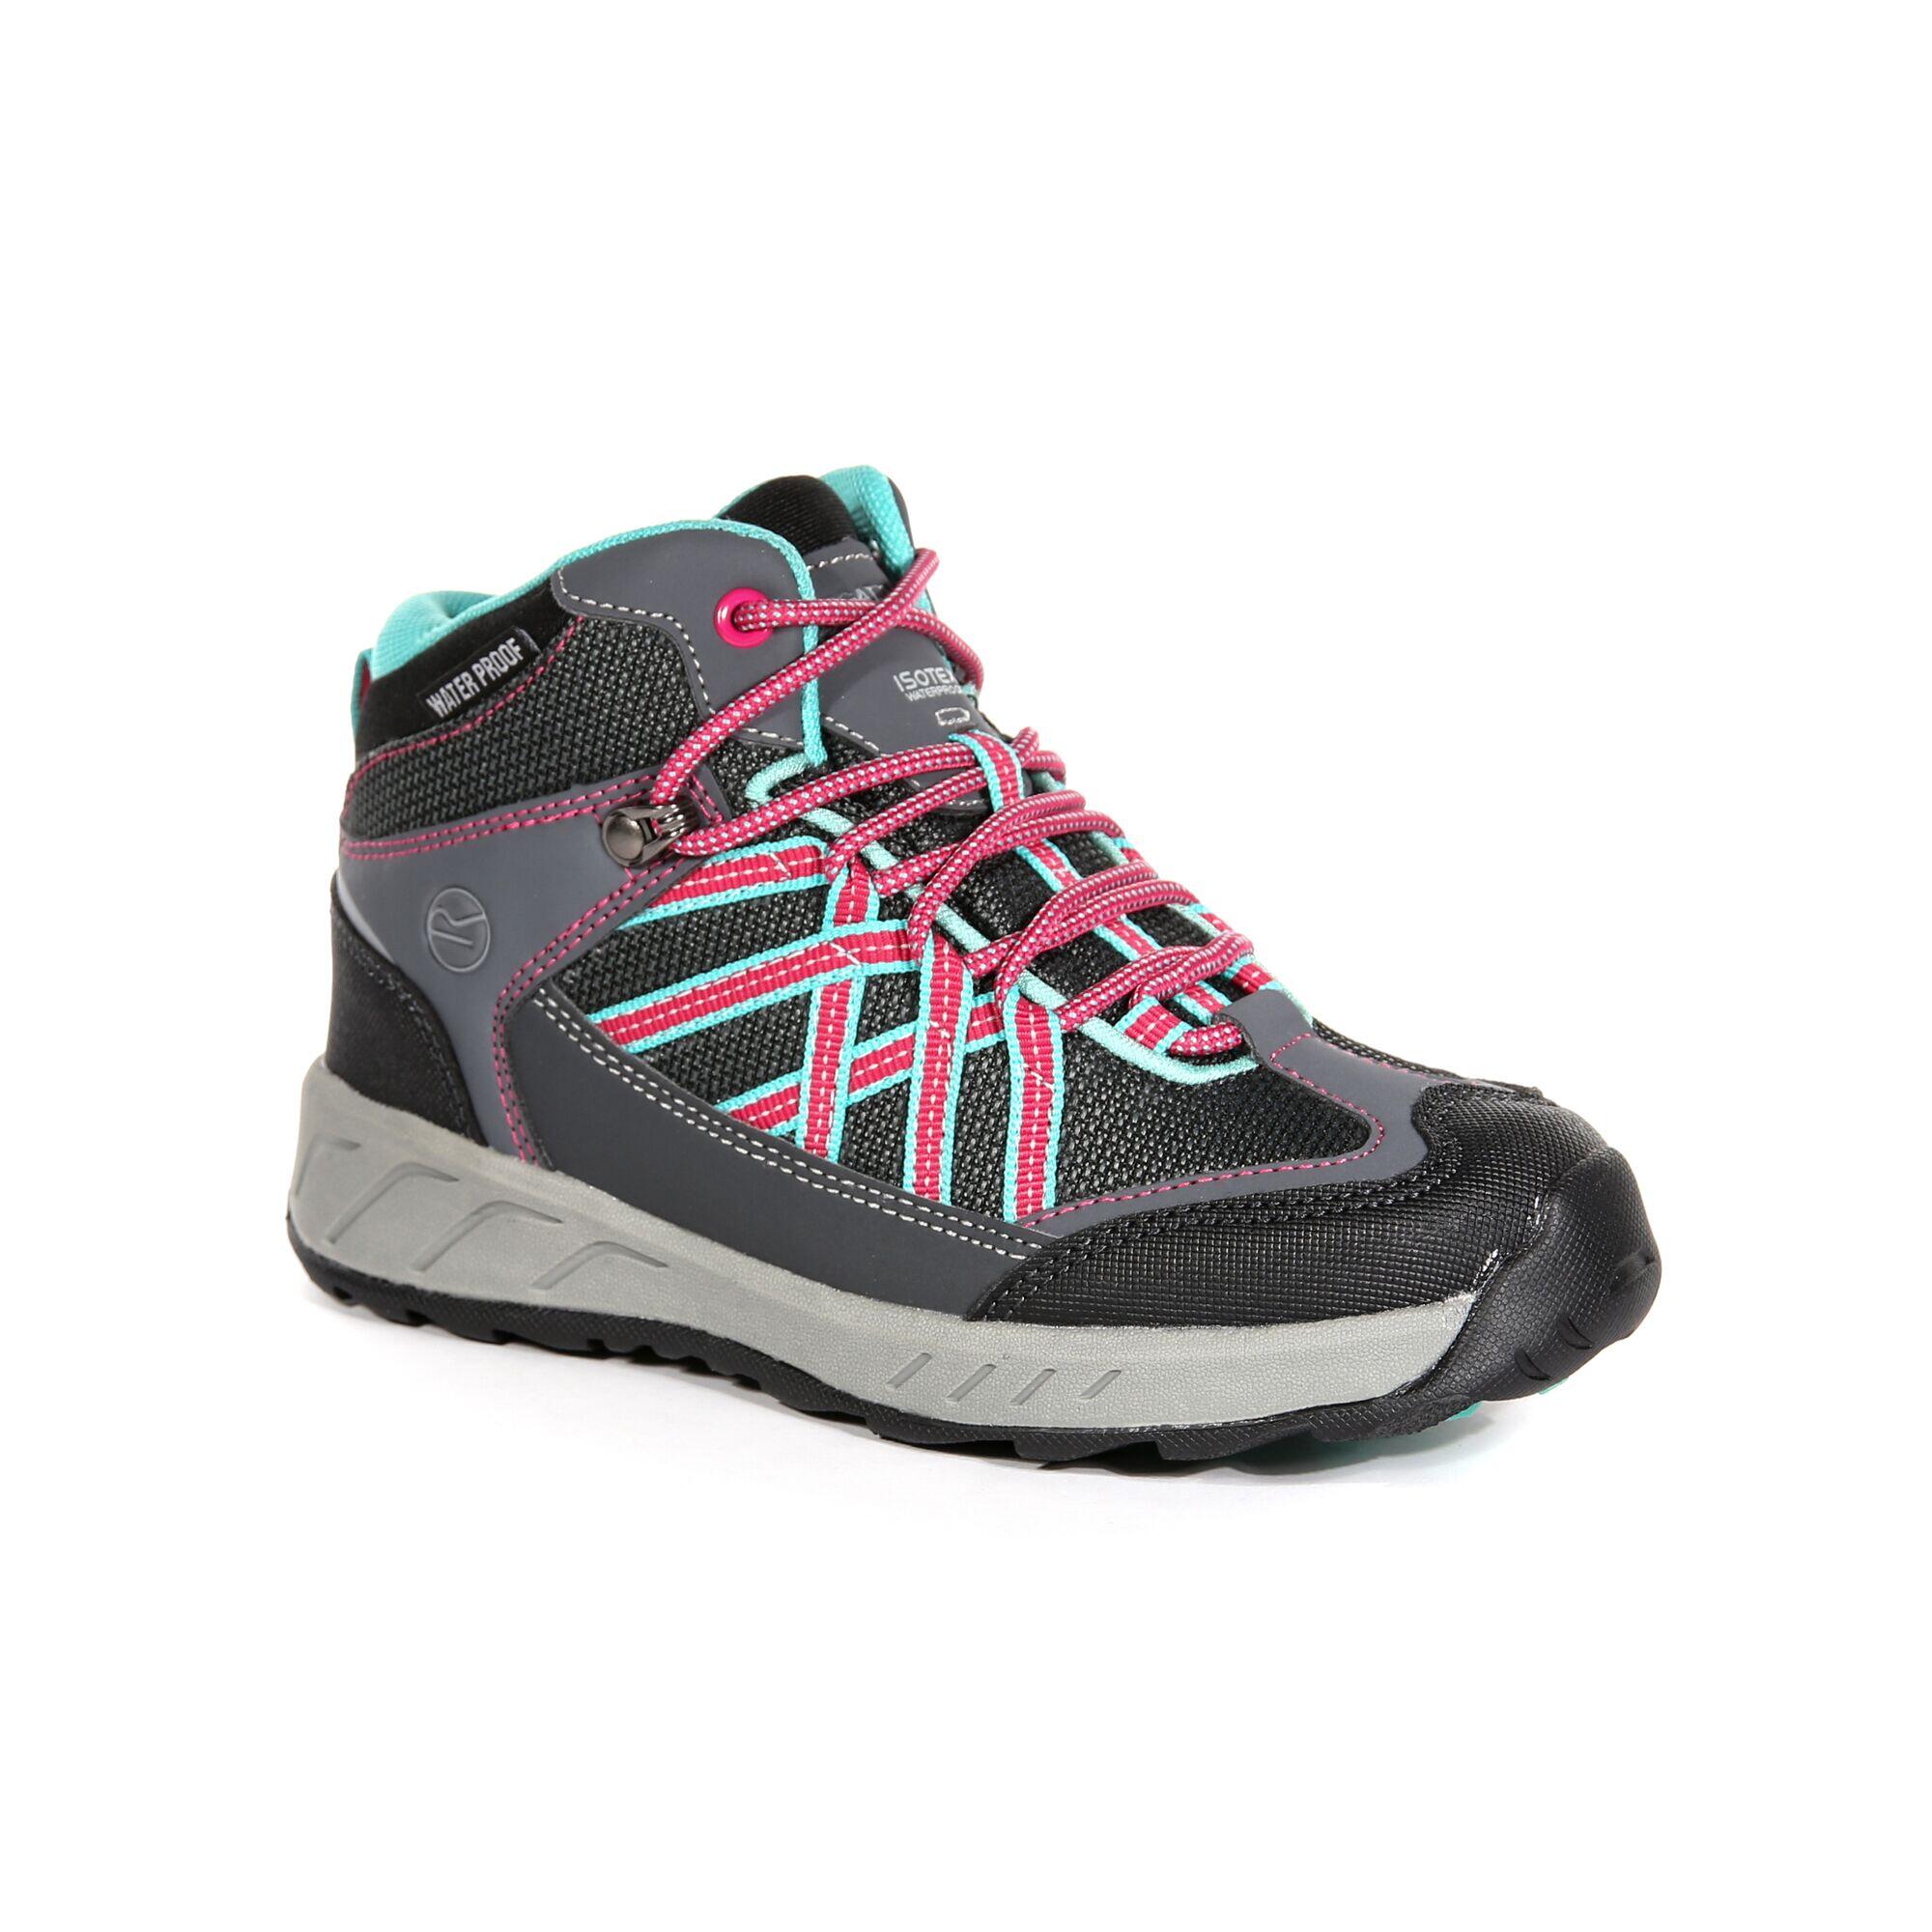 Samaris Kids' Hiking Waterproof Mid Boots - Light Grey/Pink 2/5